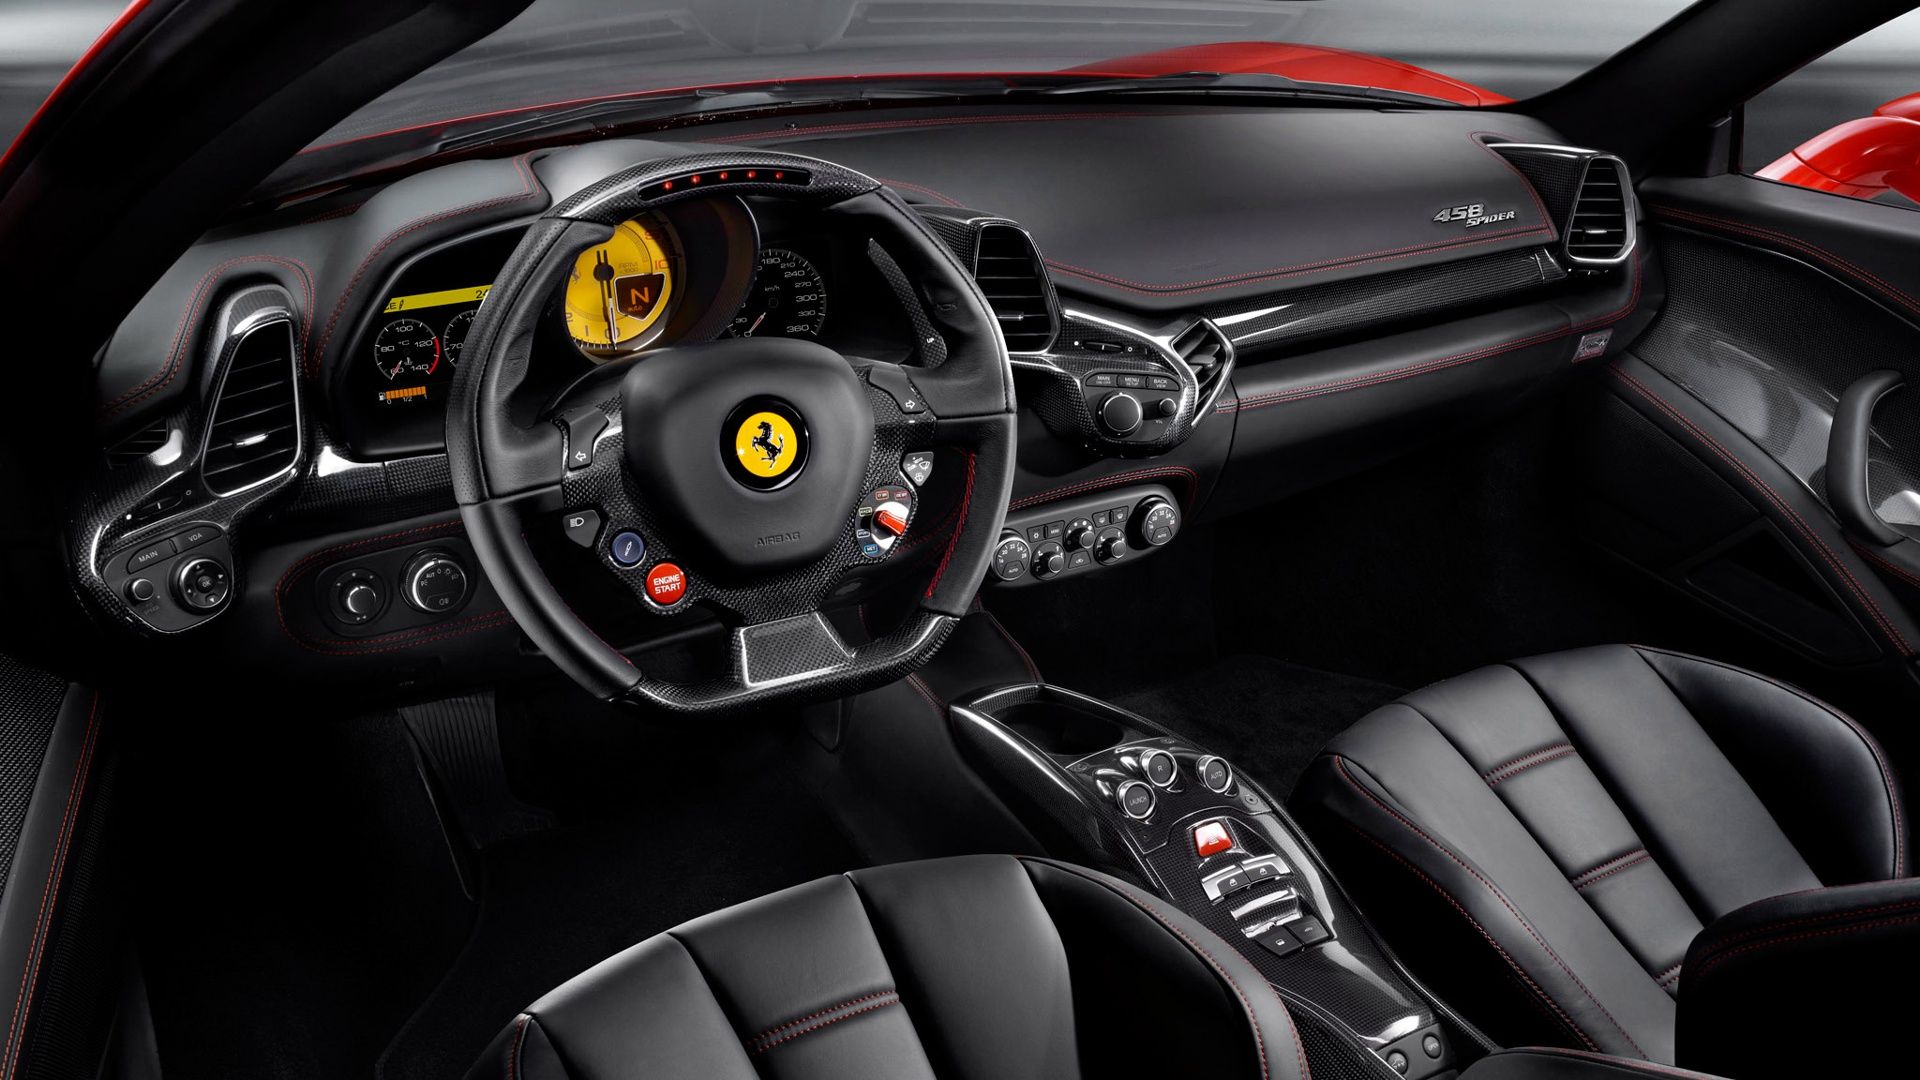 Stunning Ferrari Interior Wallpaper 45801 1920x1080px